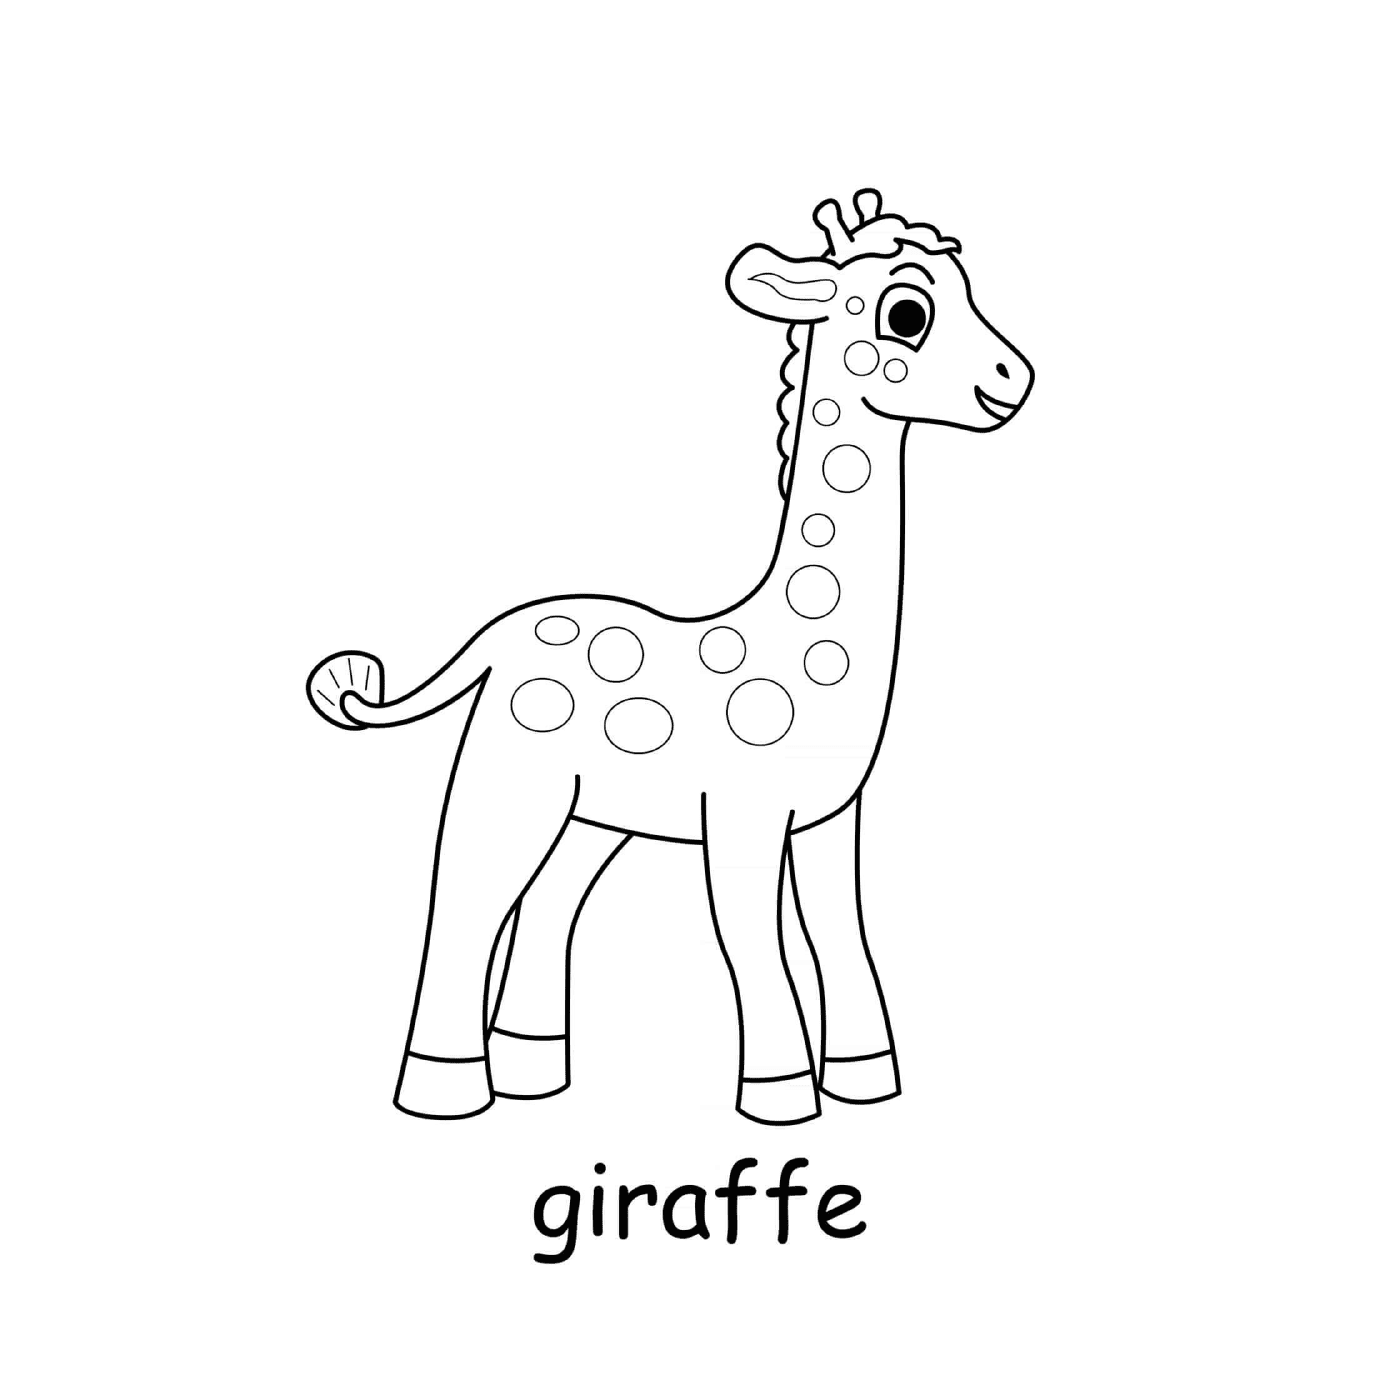   Girafe de la savane africaine 